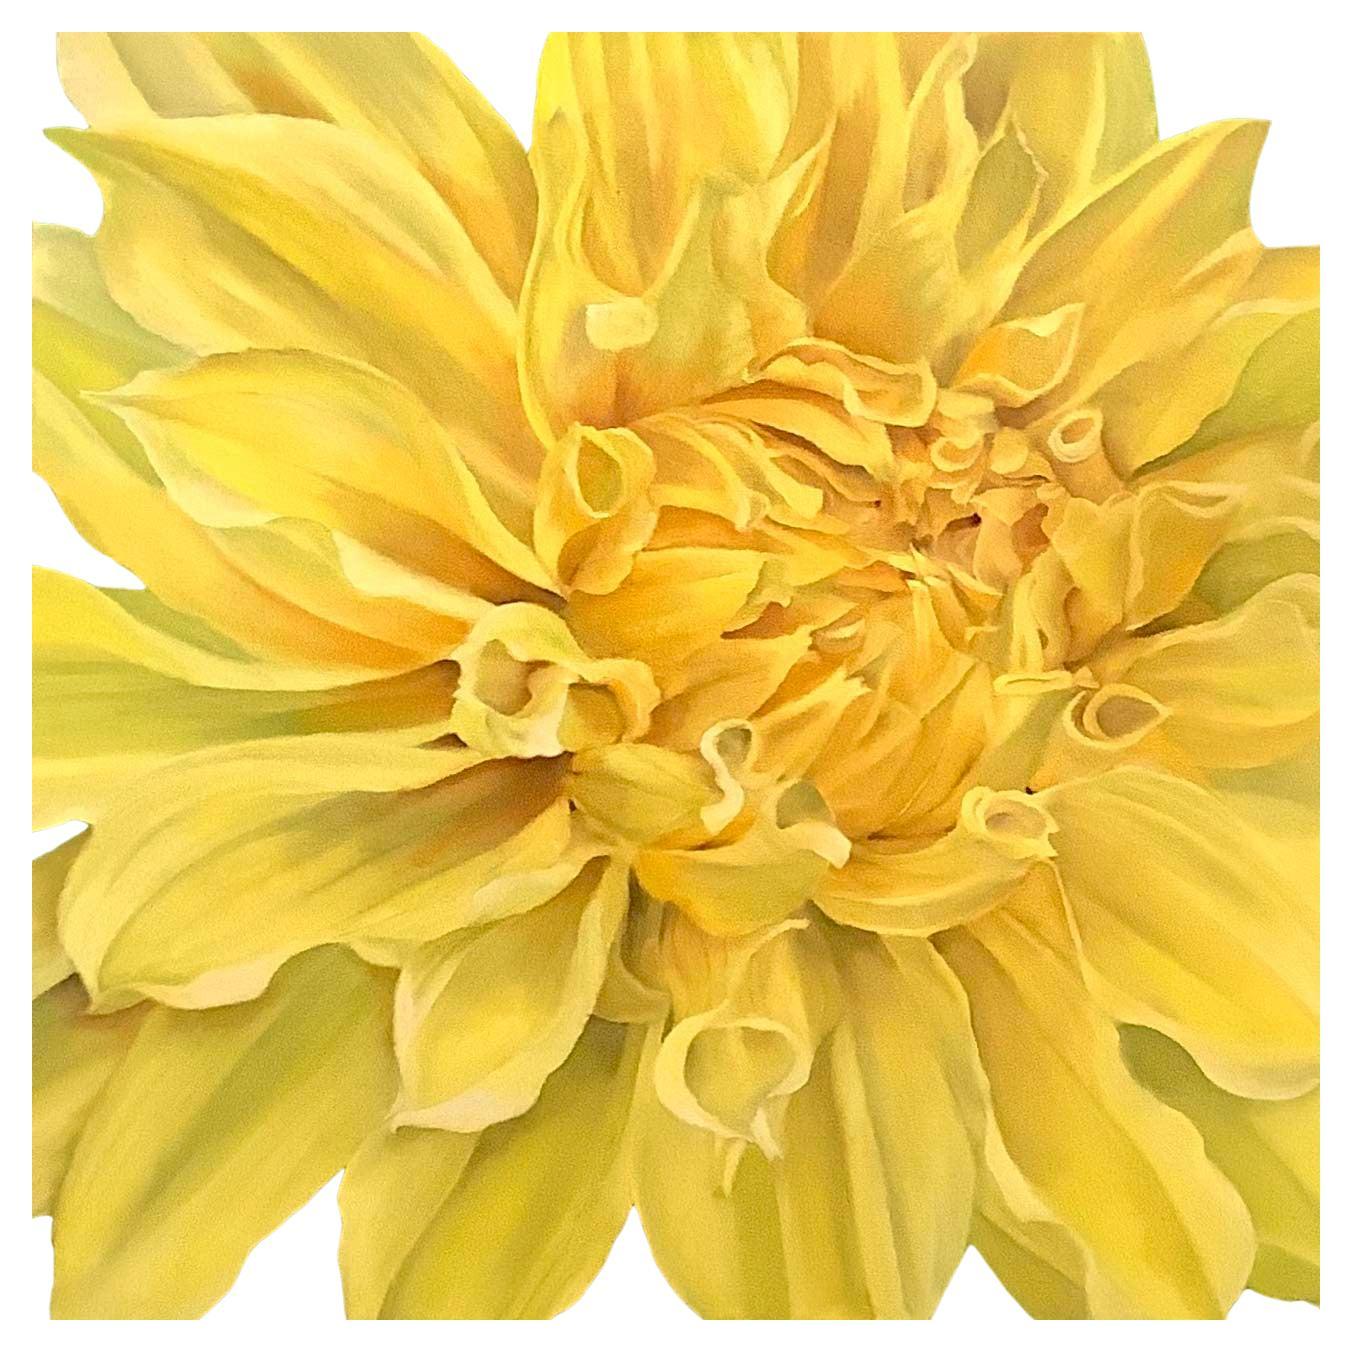 Framed Oil on Canvas "Delia" - Delilah Flower by Shelly Gurton For Sale